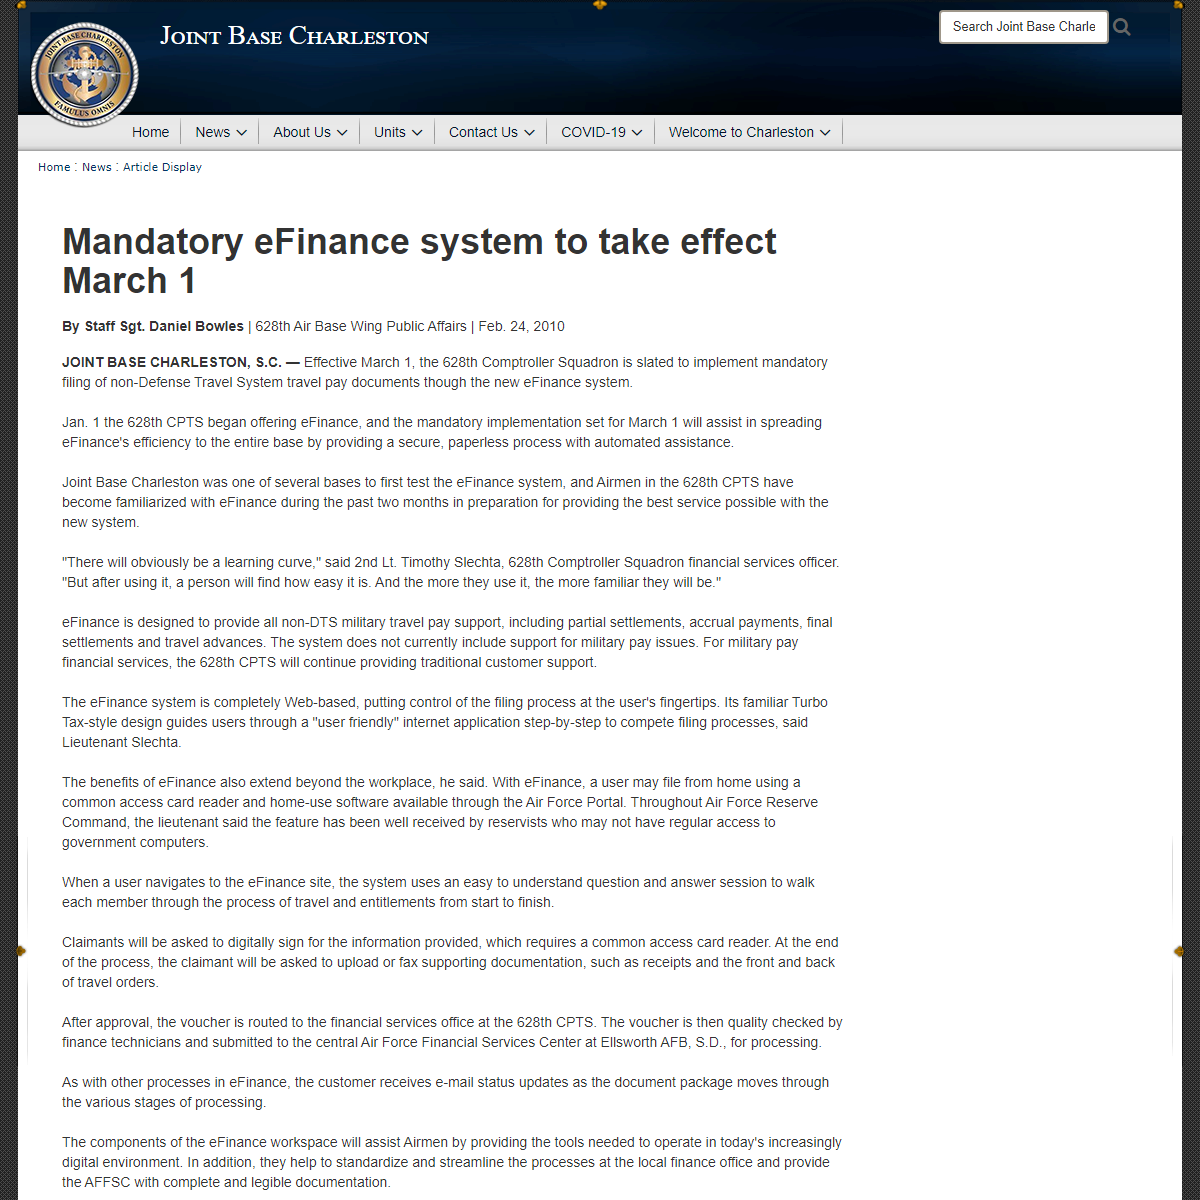 A complete backup of https://www.jbcharleston.jb.mil/News/Article-Display/Article/235595/mandatory-efinance-system-to-take-effec